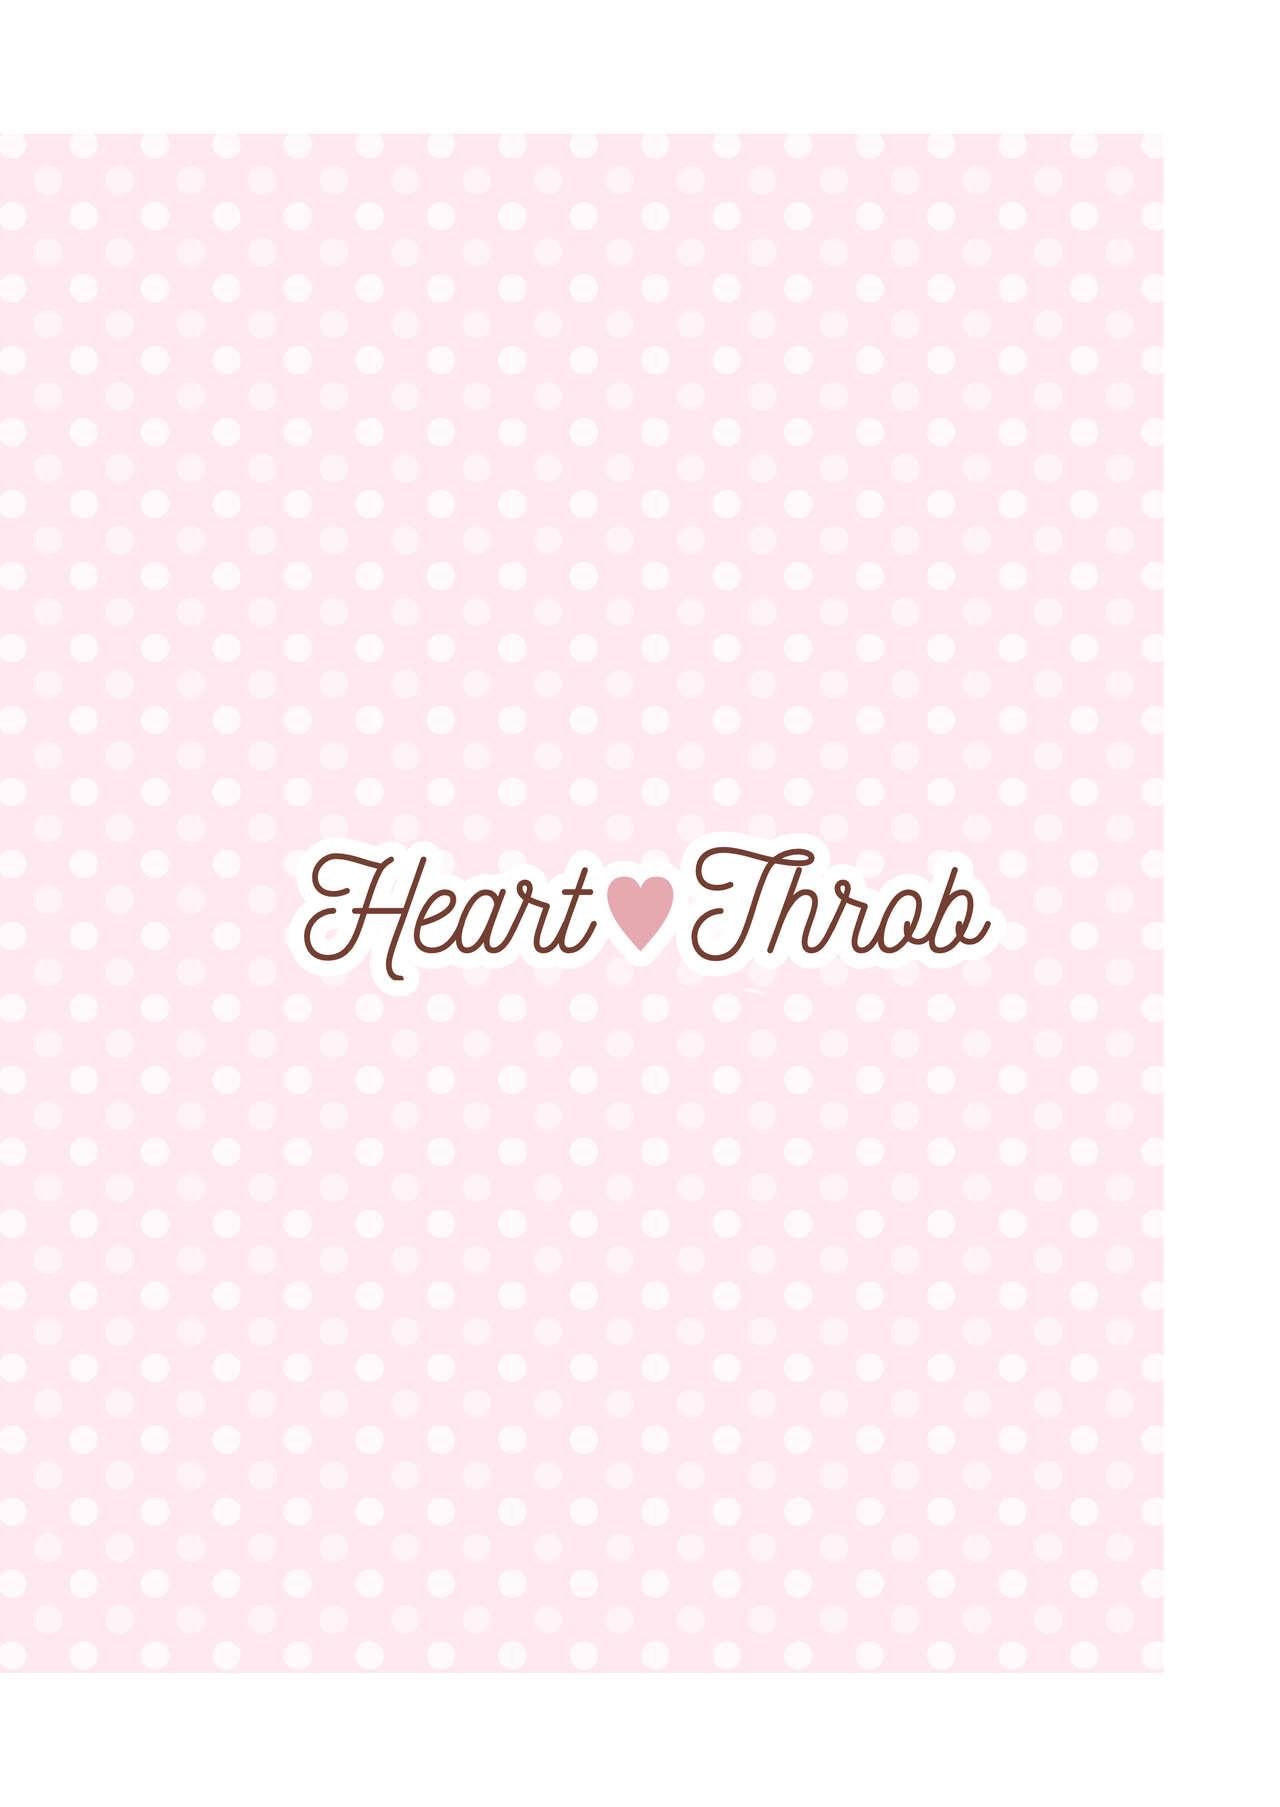 Heart Throb 2 21